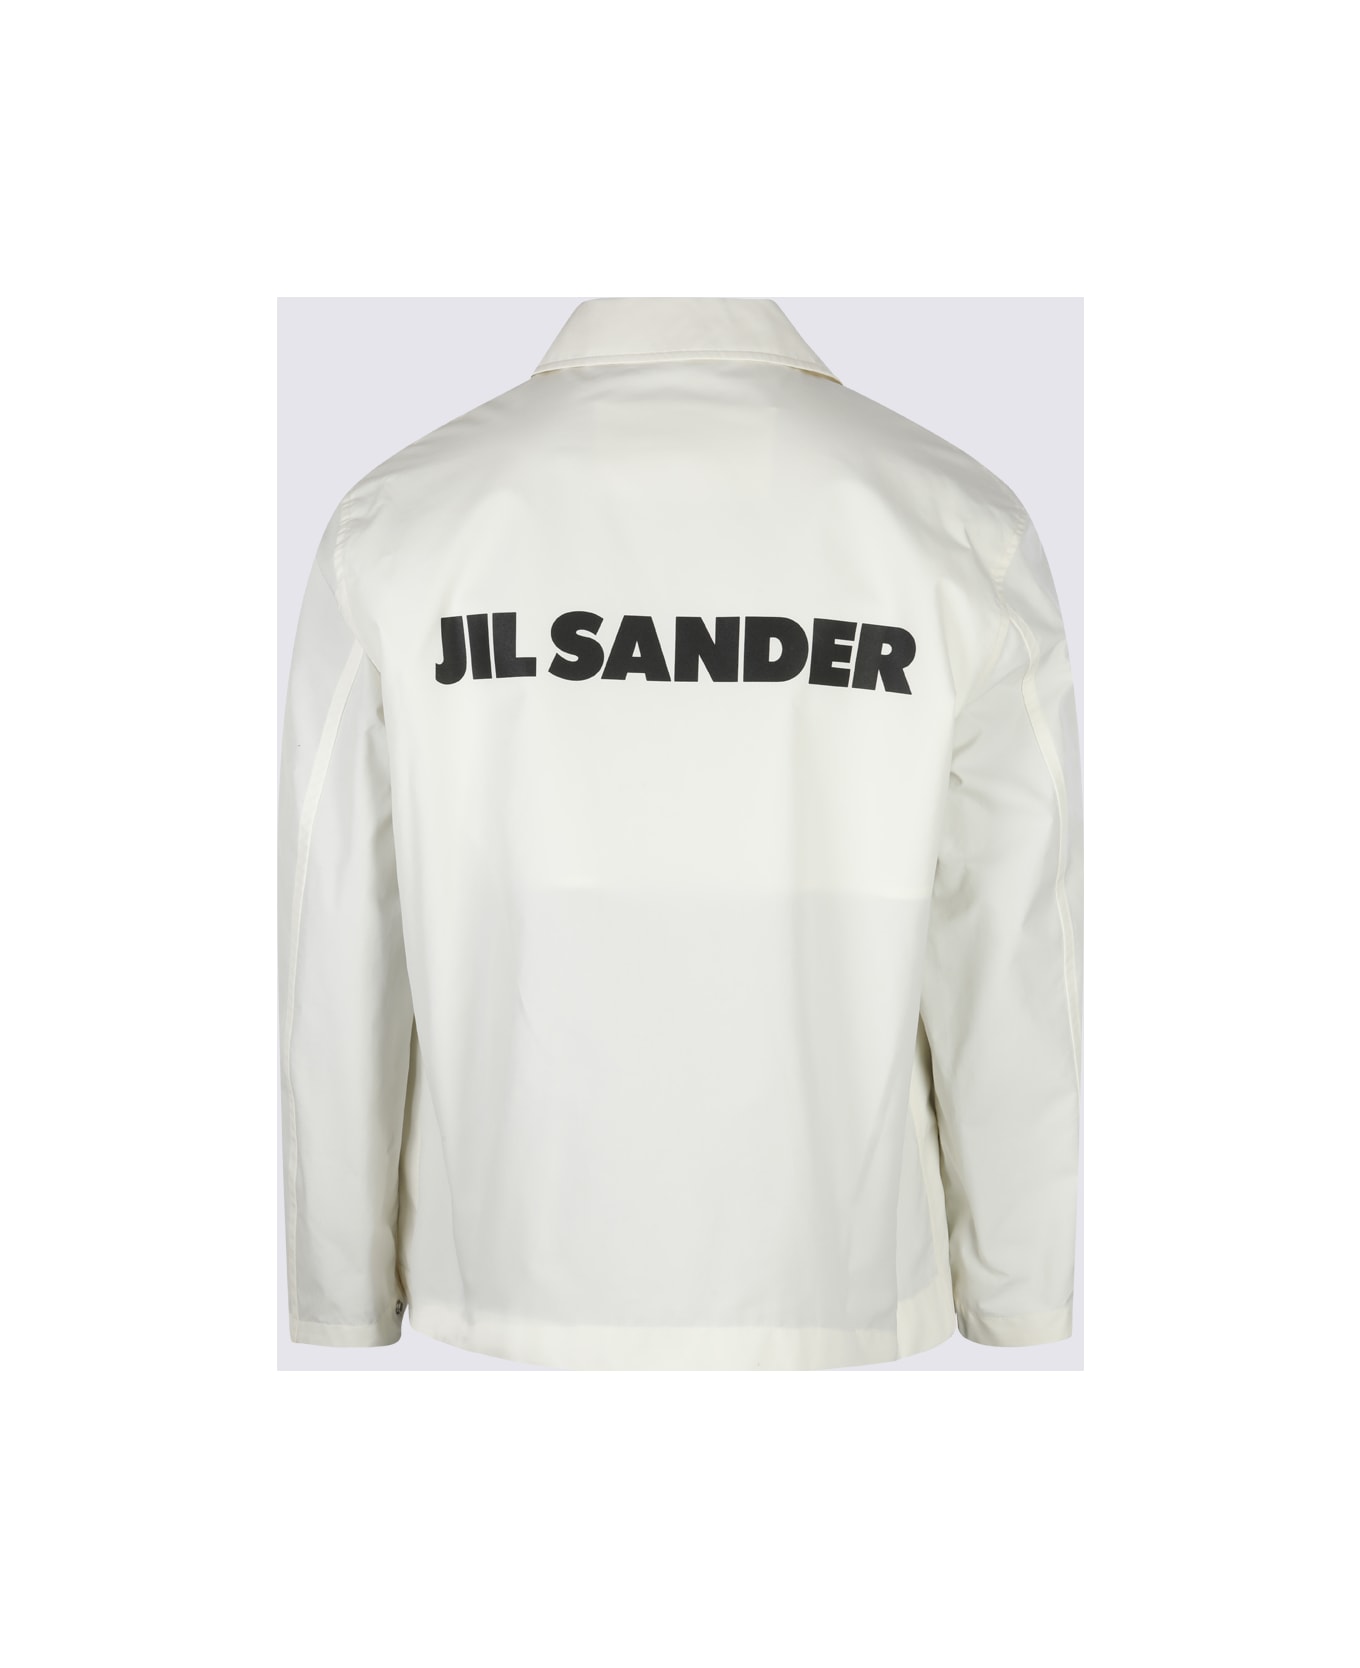 Jil Sander White Cotton Shirt Jacket - Beige